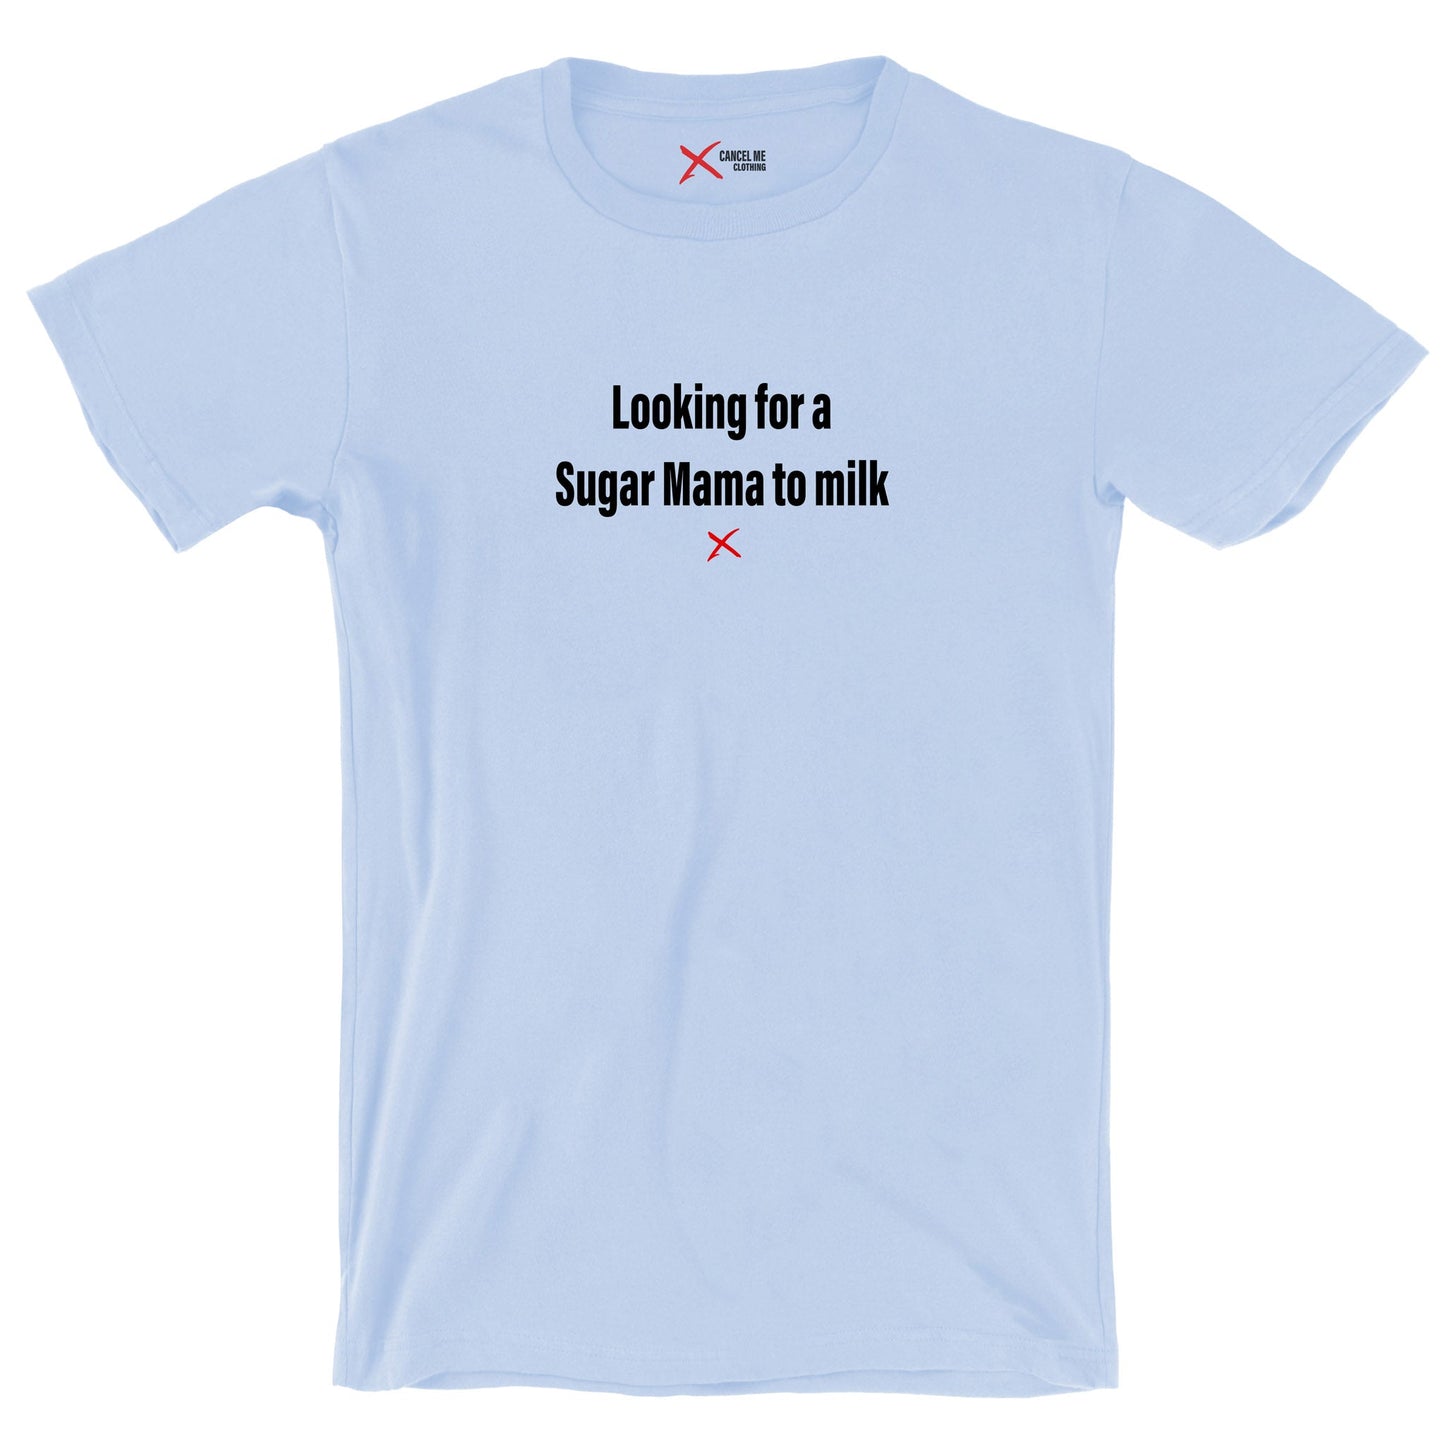 Looking for a Sugar Mama to milk - Shirt